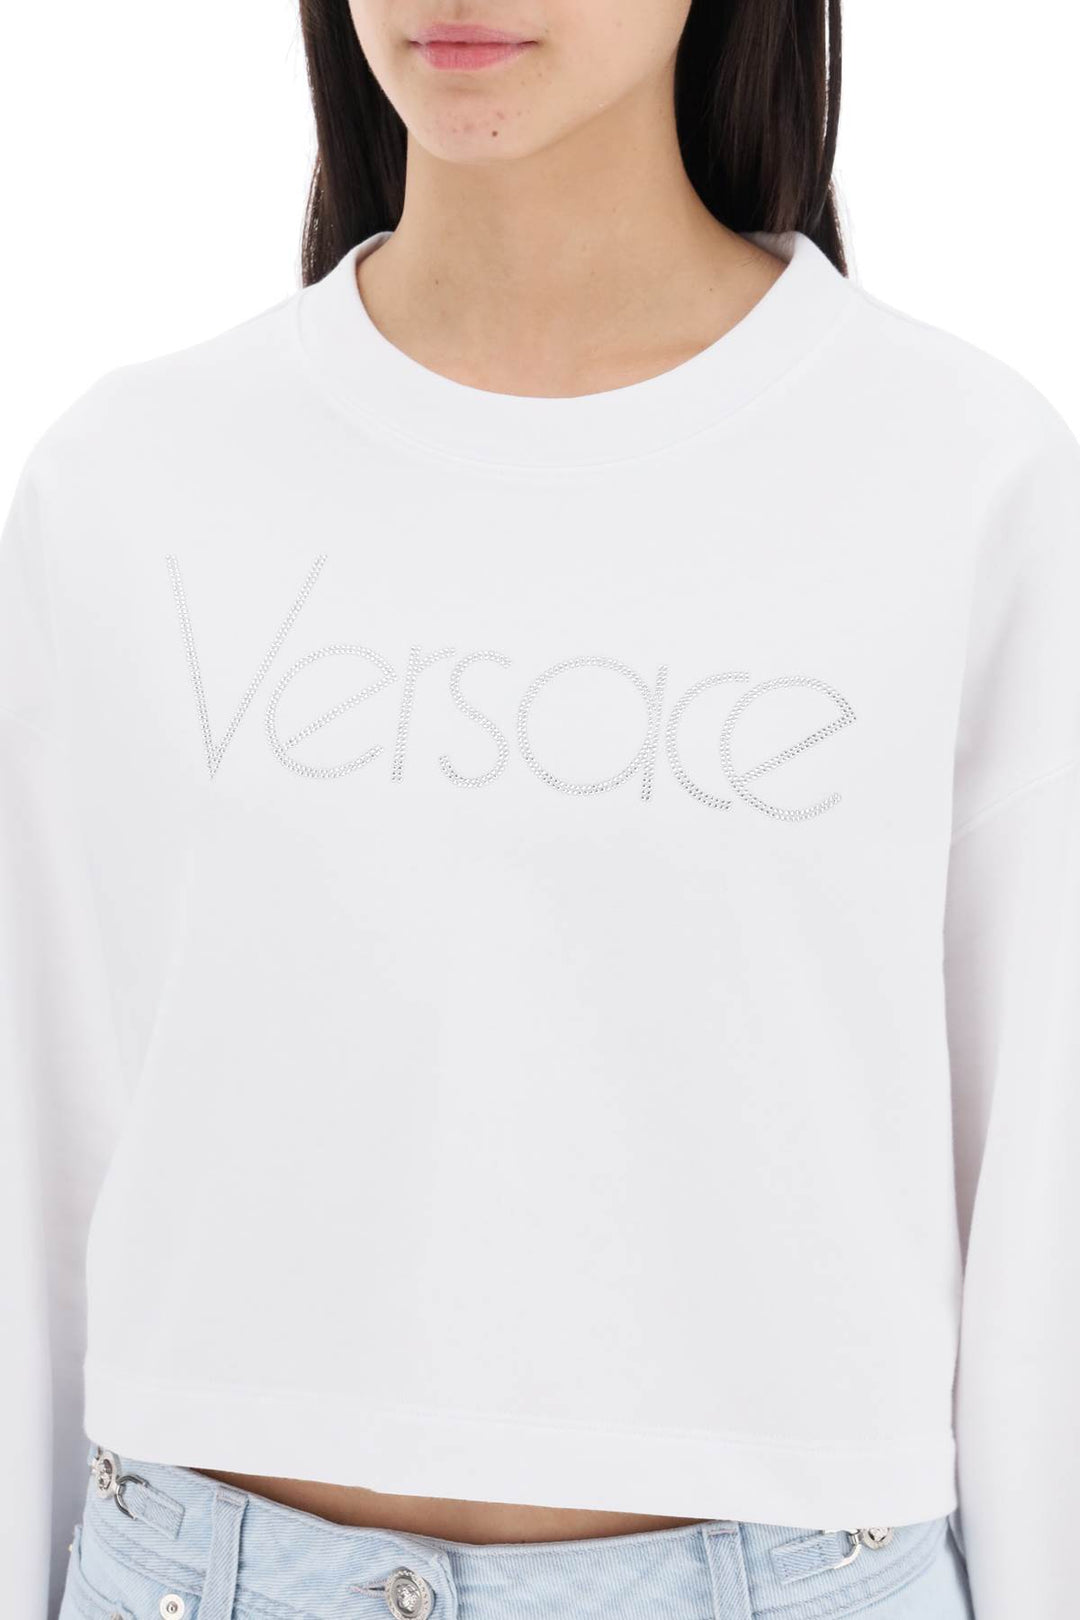 Versace Cropped Sweatshirt With Rhinestones   Bianco